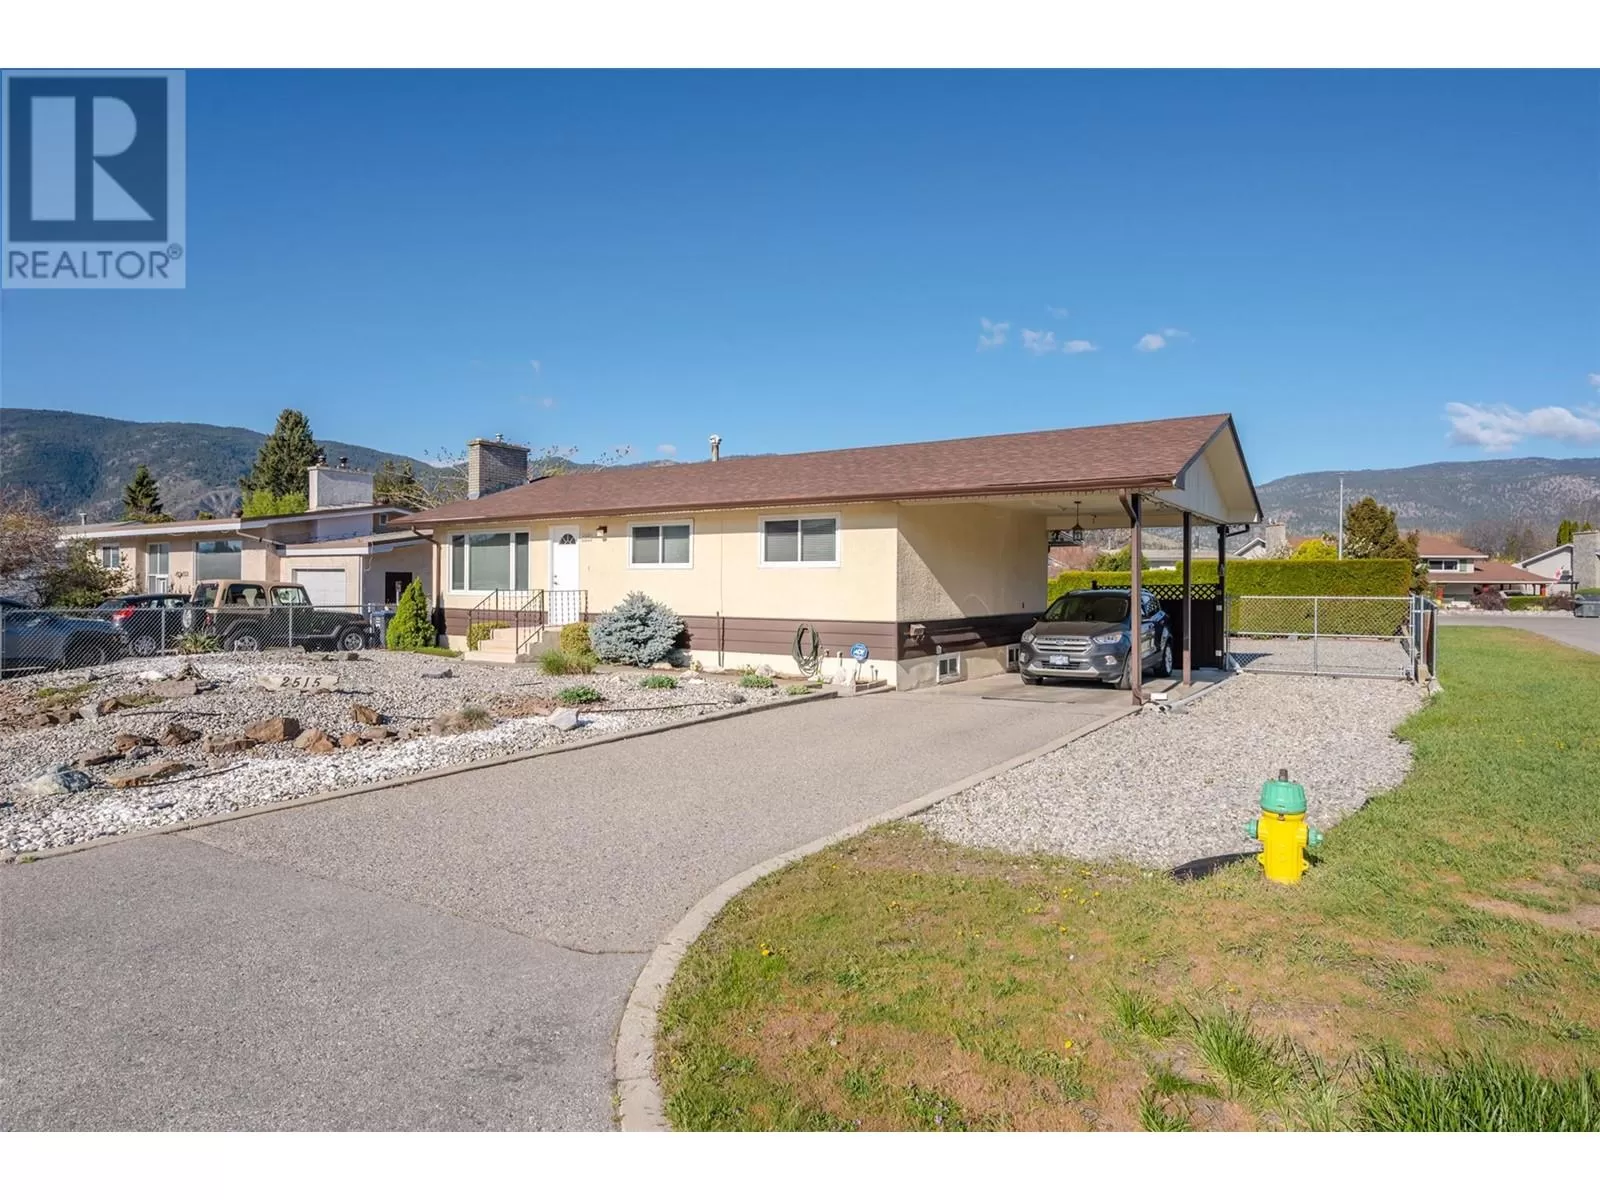 House for rent: 2515 Mckenzie Street, Penticton, British Columbia V2A 6J1